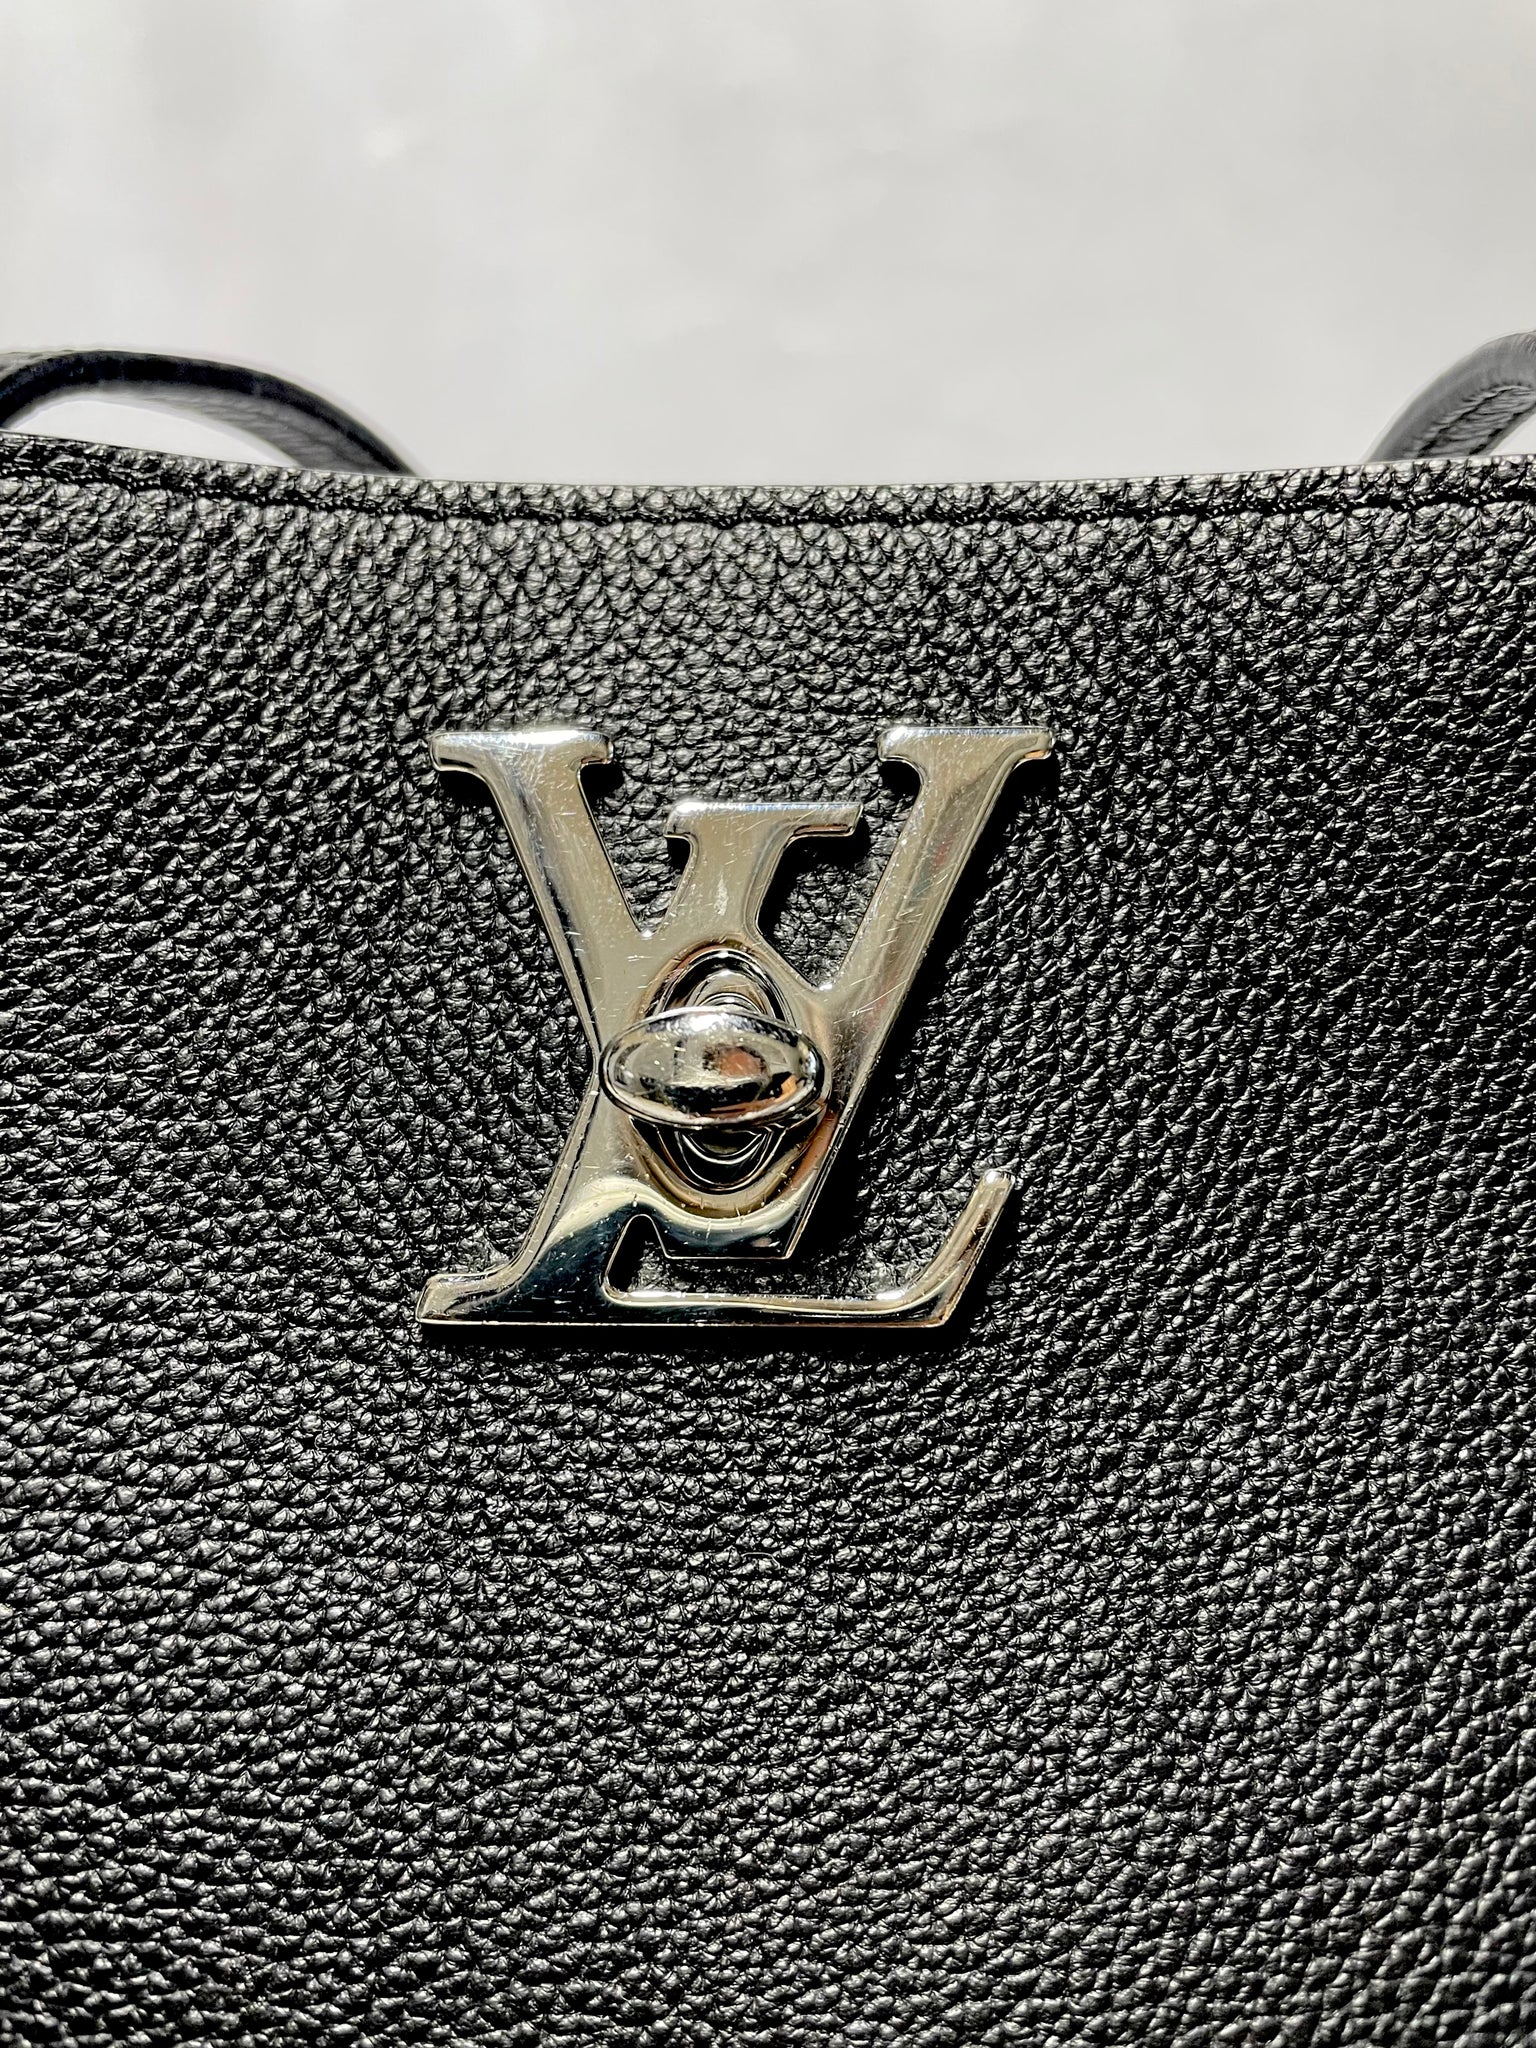 Authentic Louis Vuitton lockme braided tote